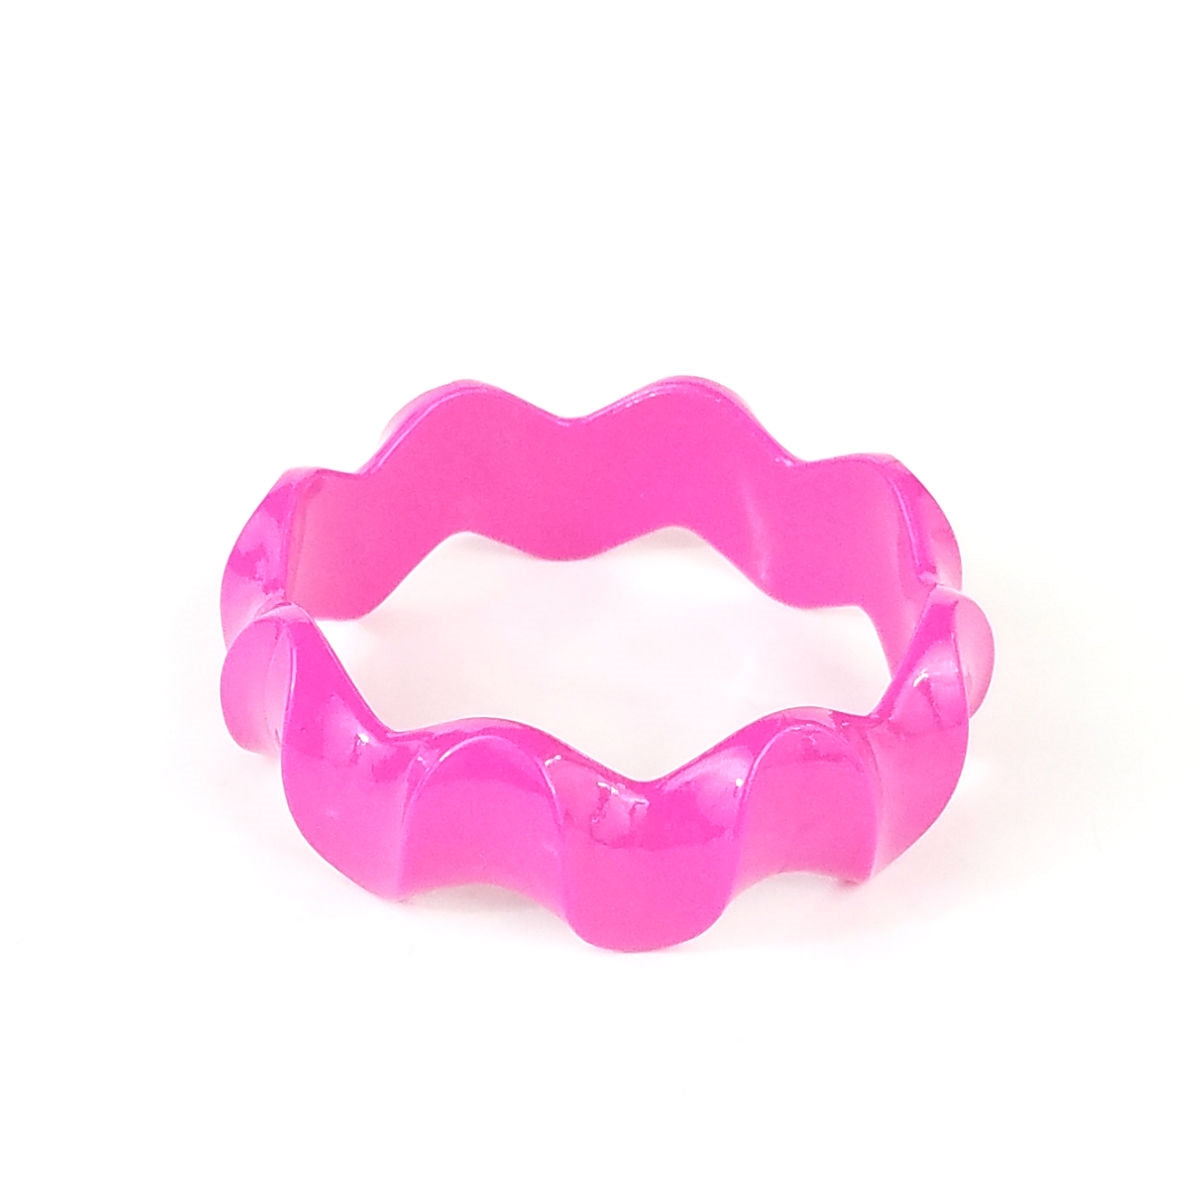 1" wide shiny plastic wavy rickrack shape bangle in bright hot pink